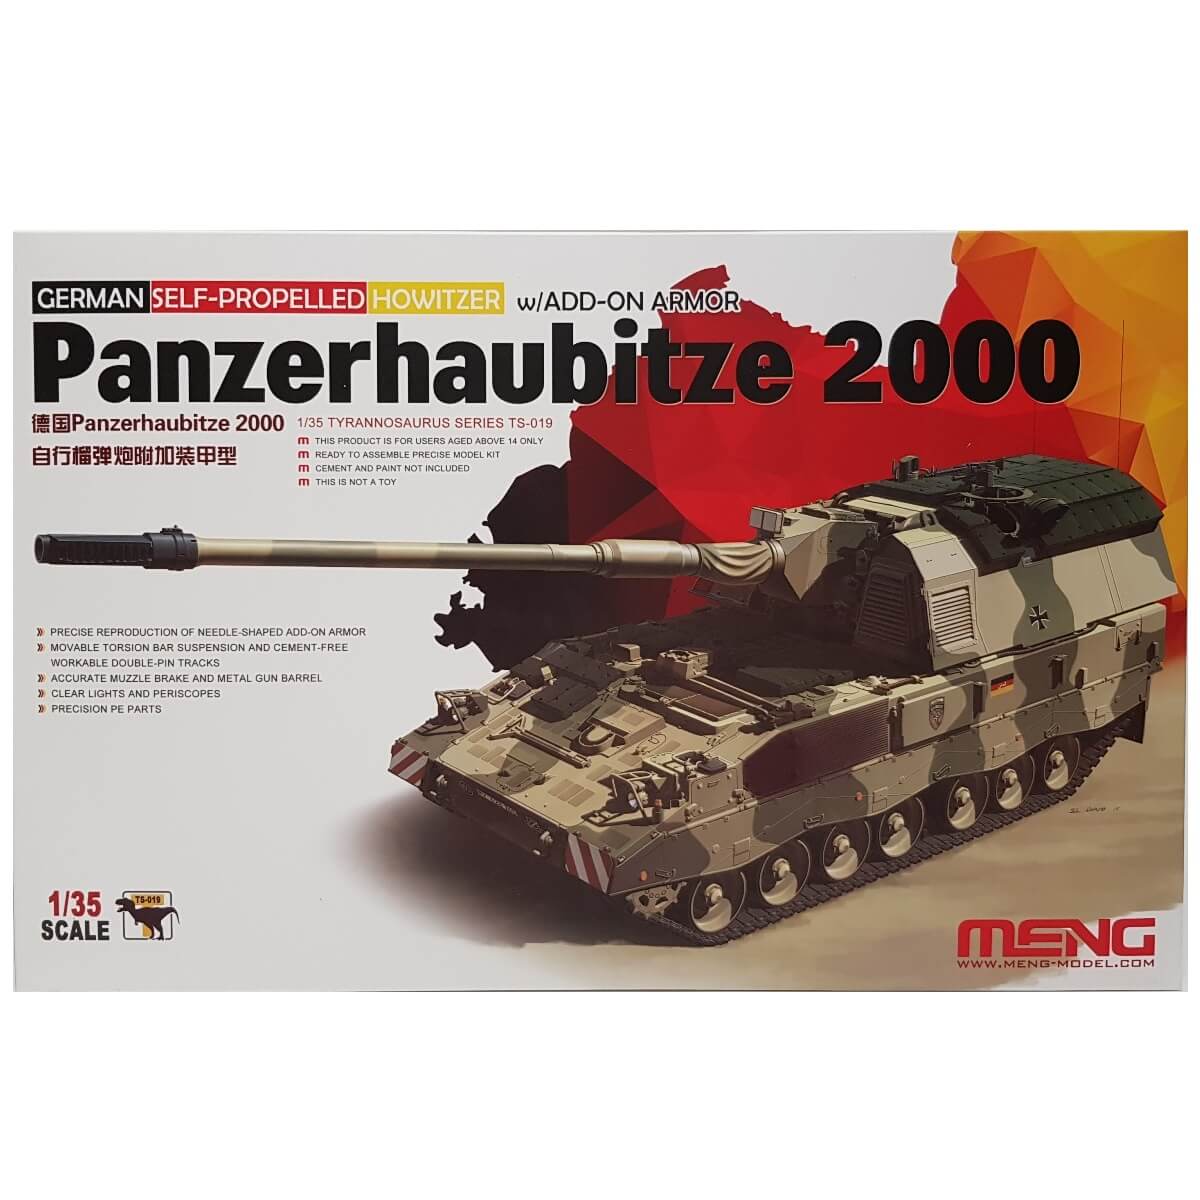 1:35 German Self-Propelled Howitzer Panzerhaubitze 2000 with add-on armor - MENG